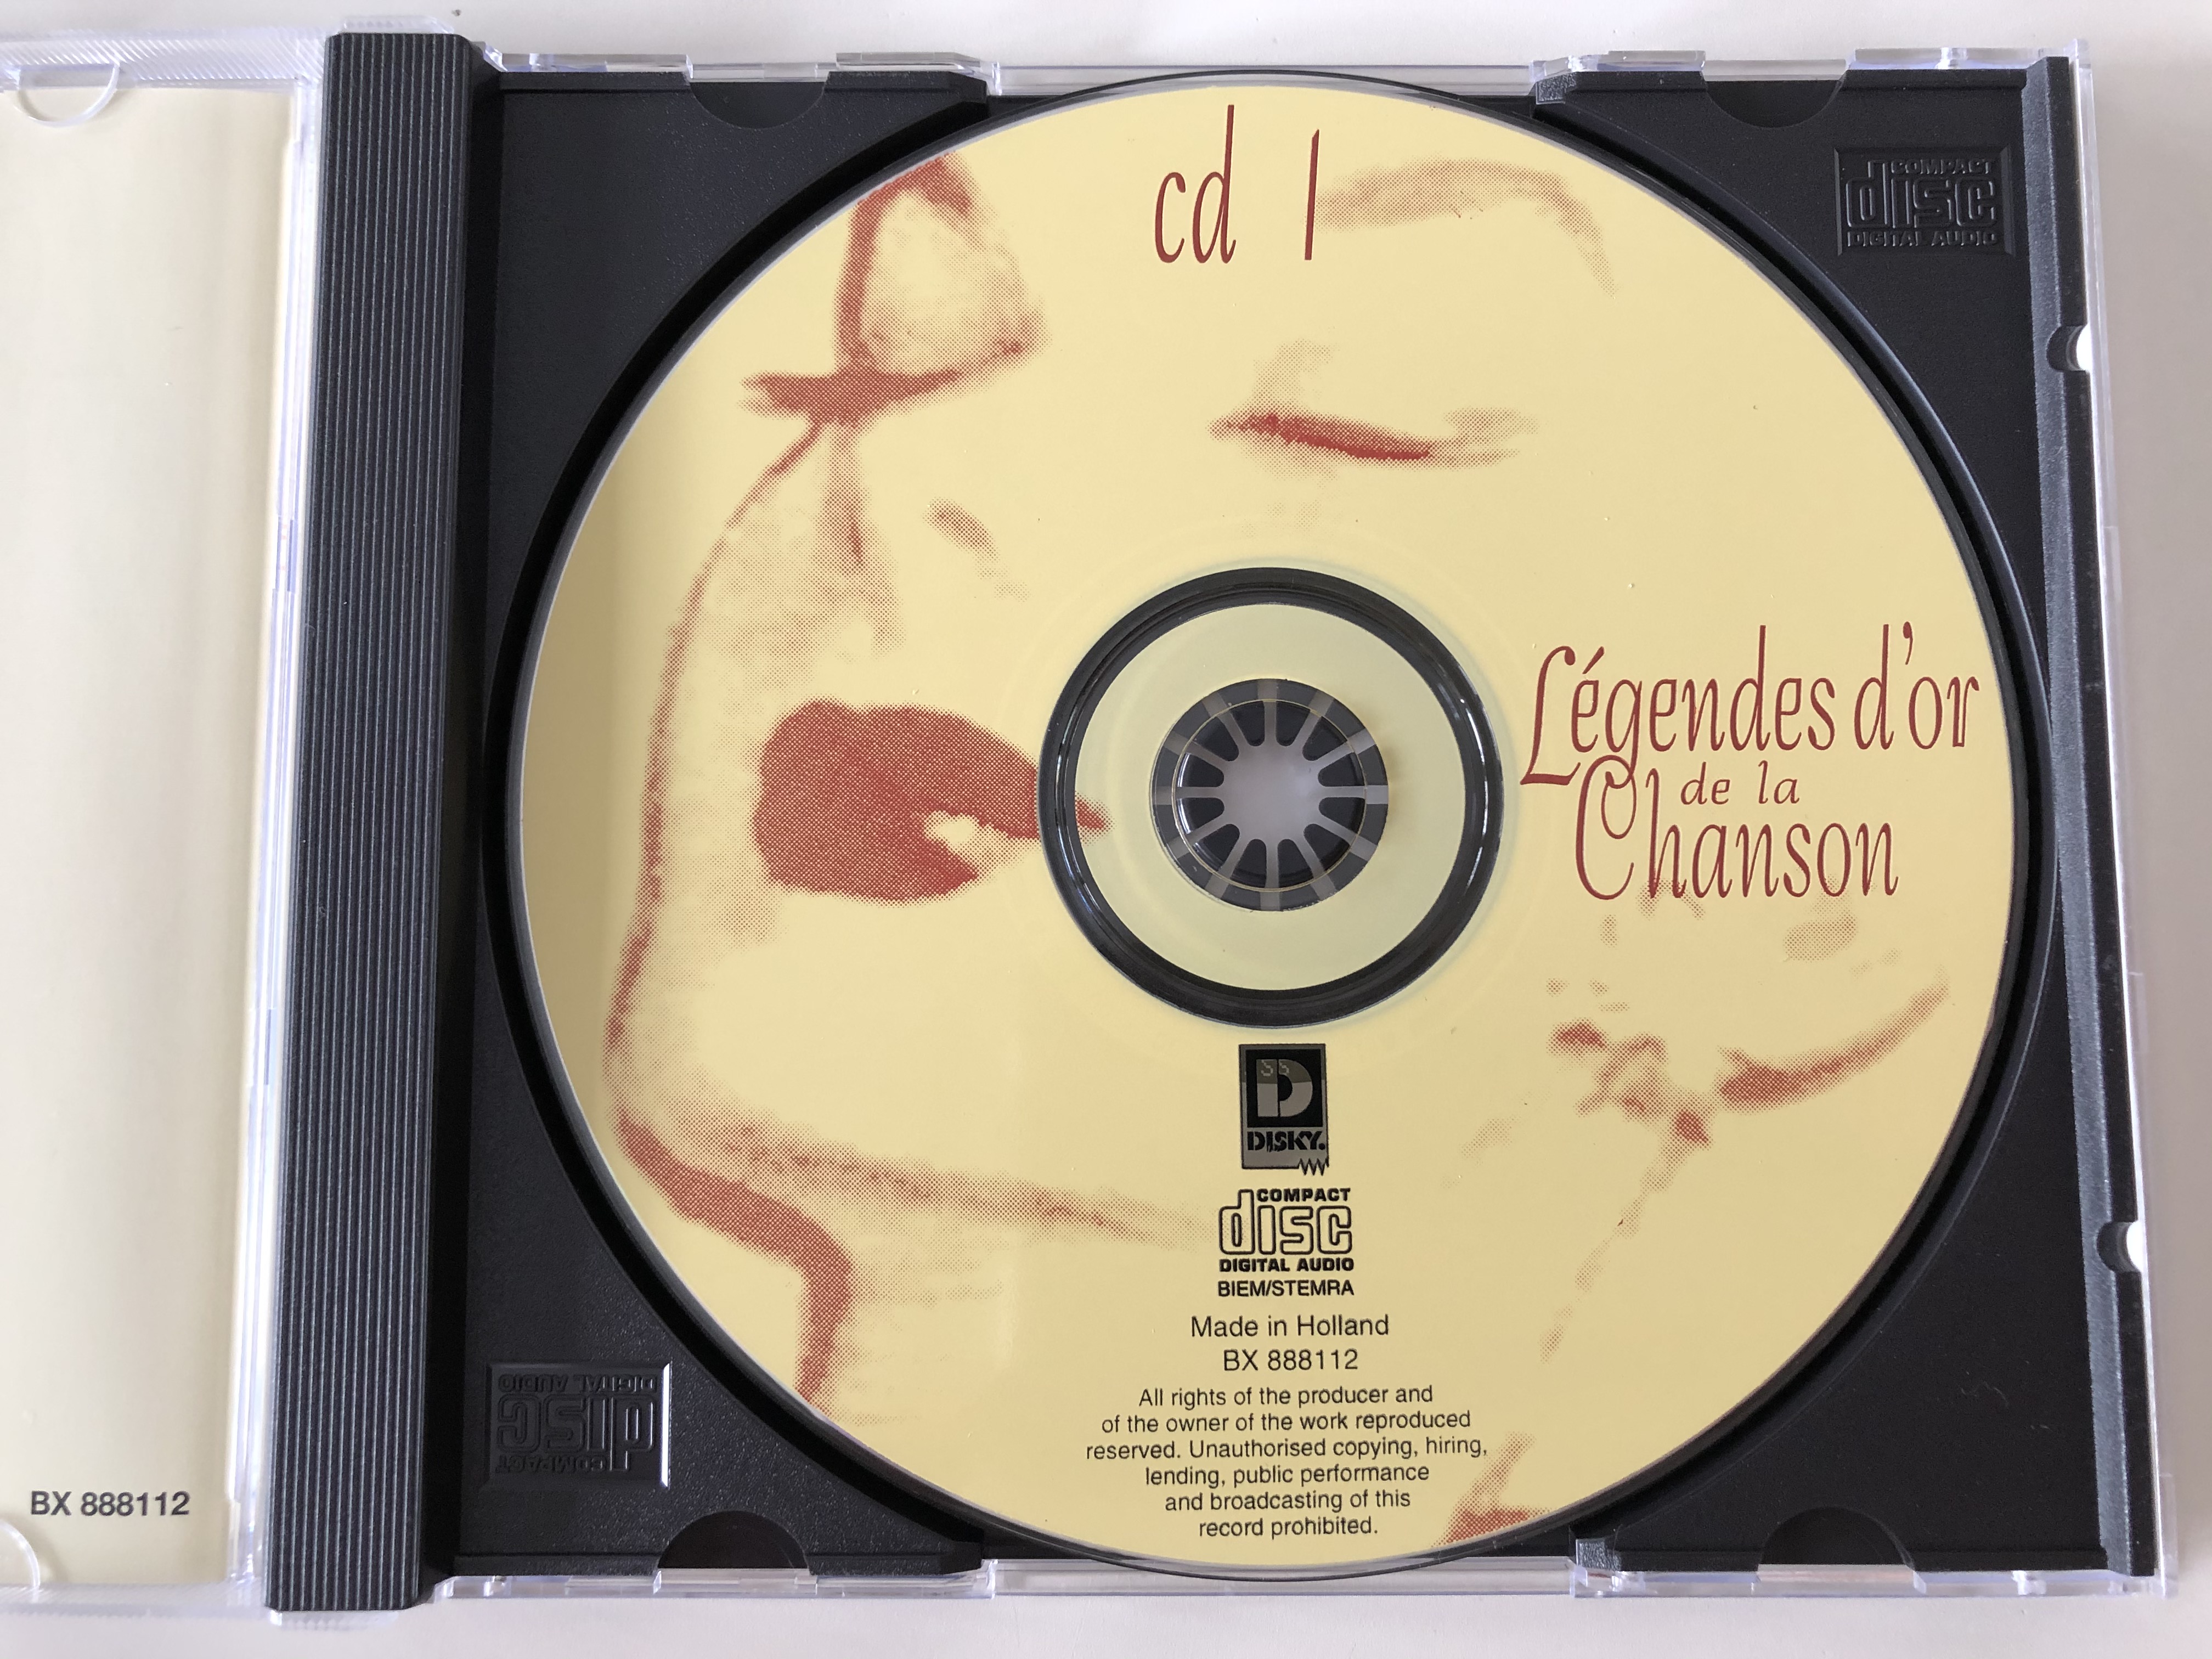 l-gendes-d-or-de-la-chanson-edith-piaf-tino-rossi-charles-trenet-jean-gabin-guy-berry-cd-1-disky-audio-cd-1998-bx-888112-3-.jpg